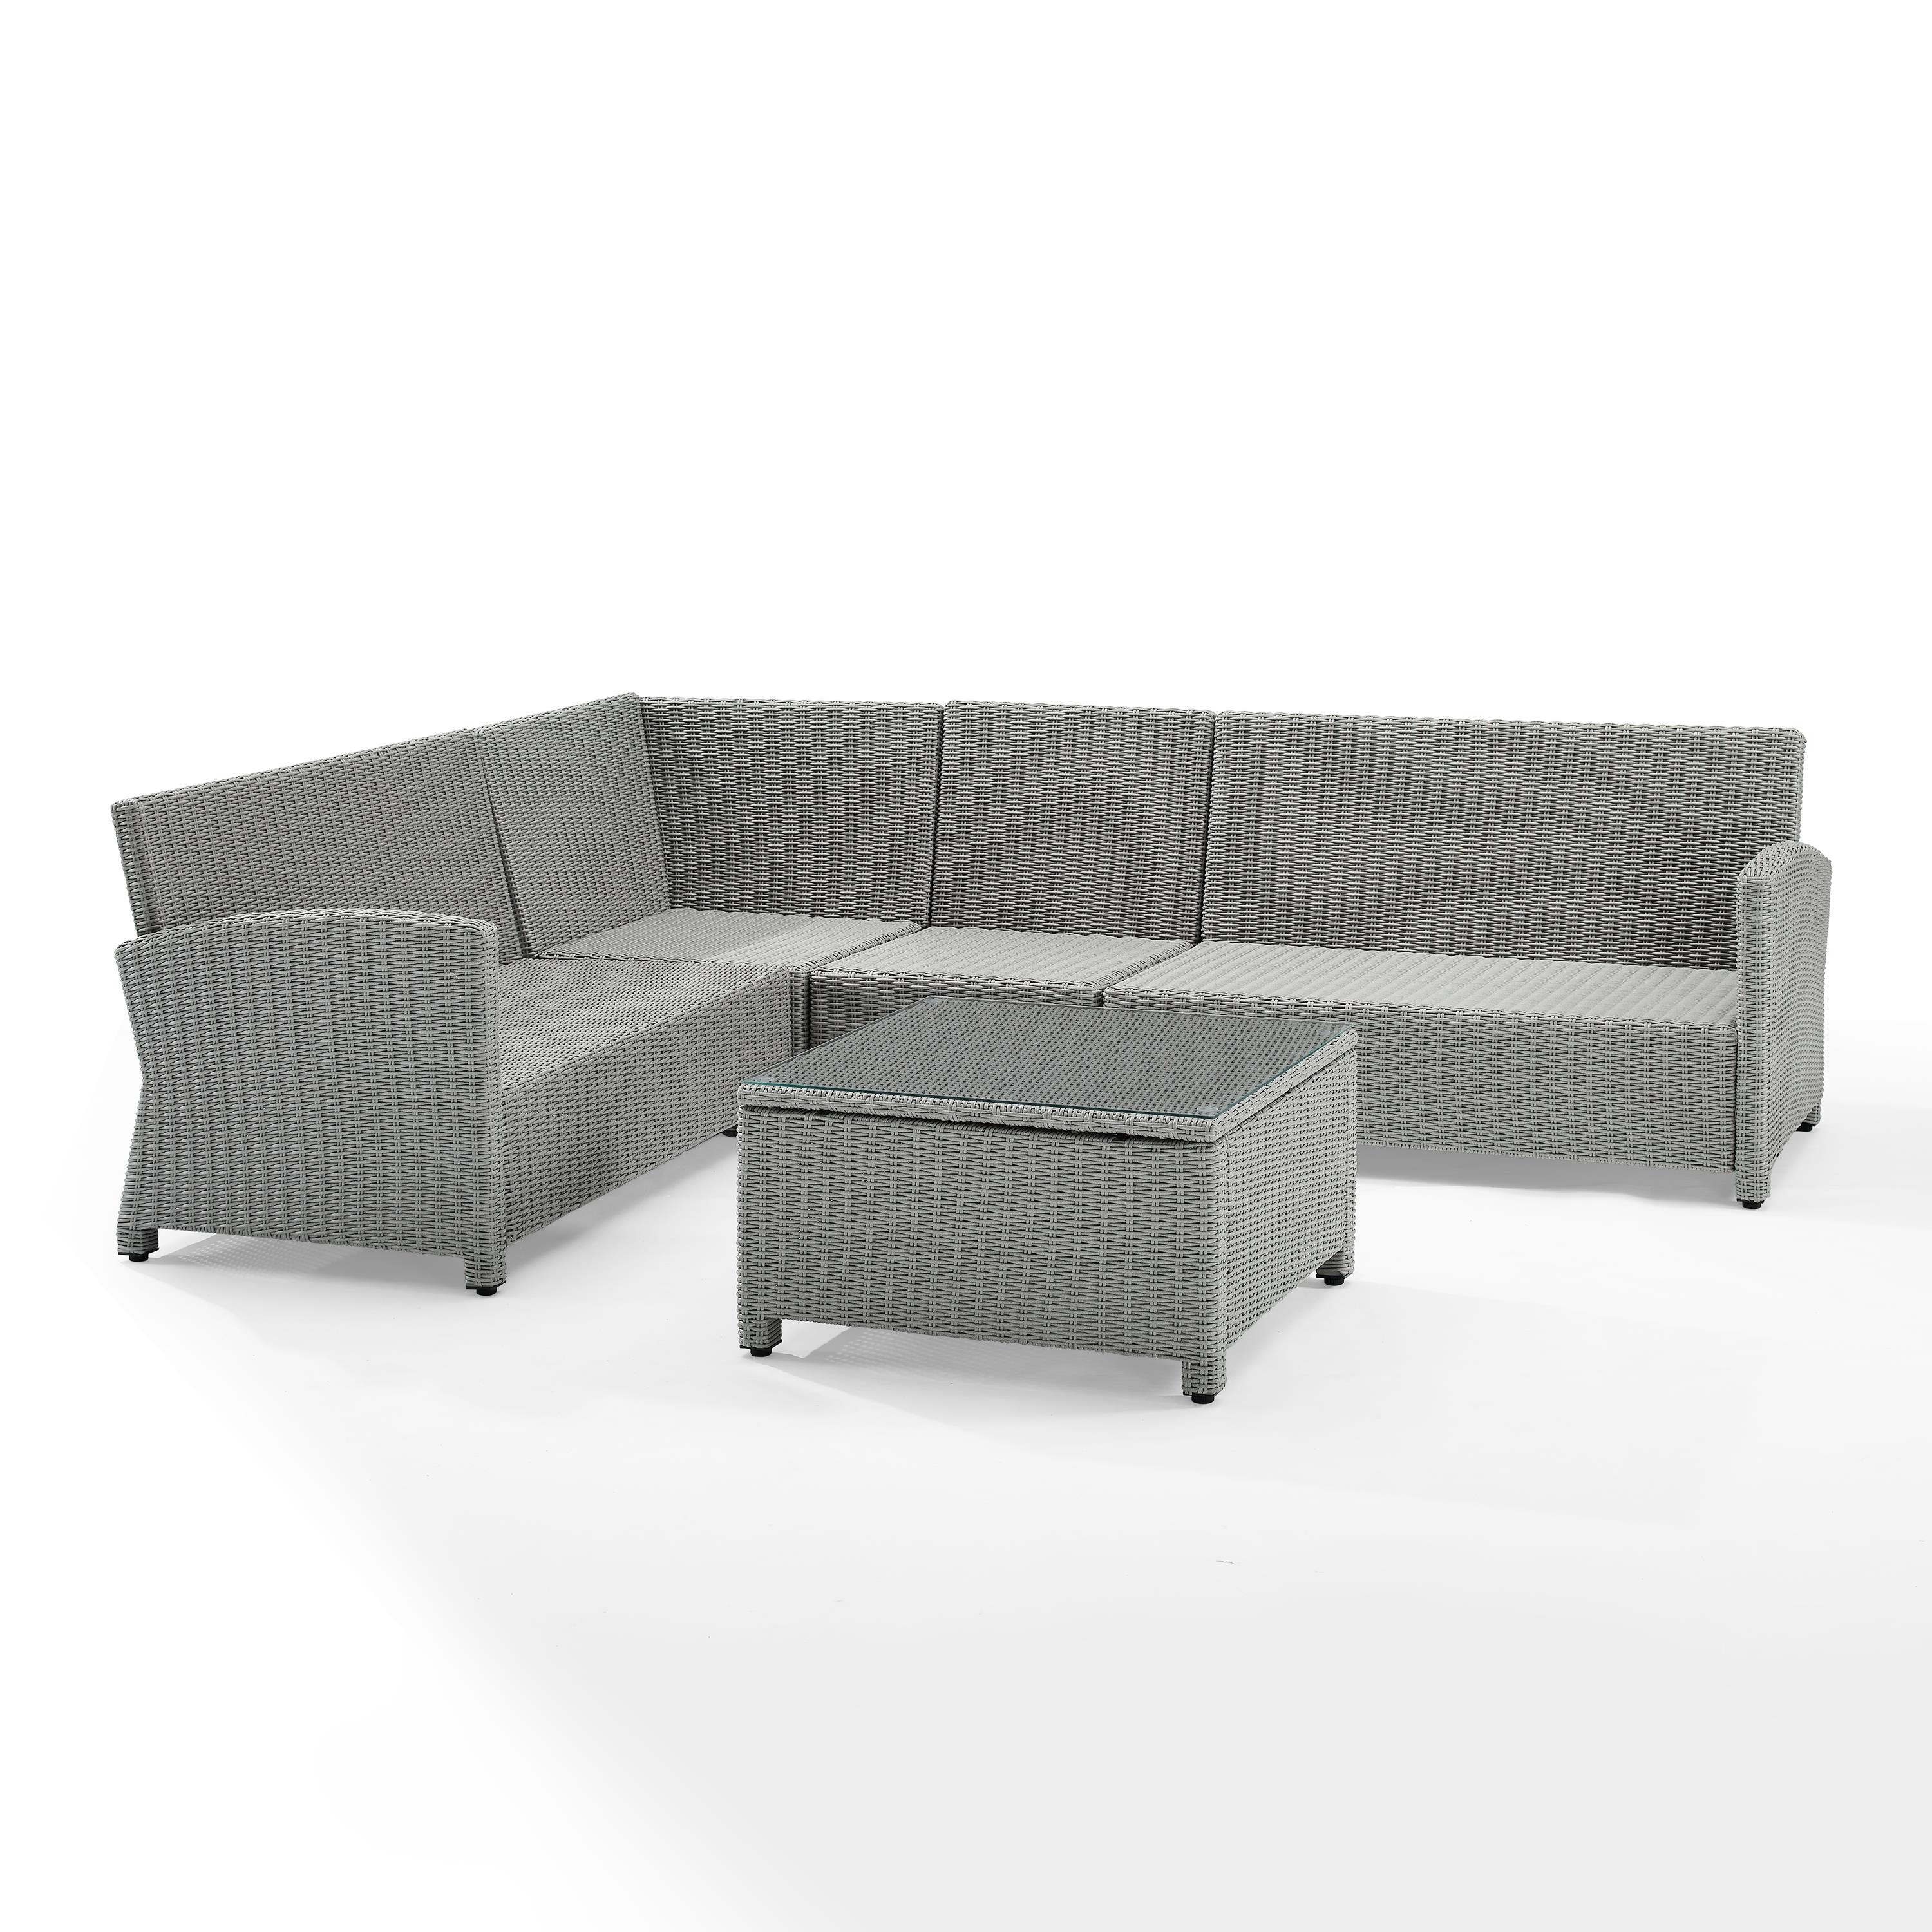 Crosley Furniture Bradenton 5-Piece Outdoor Sectional Sofa Wicker Conversation Patio Furniture Set for Deck - image 4 of 9